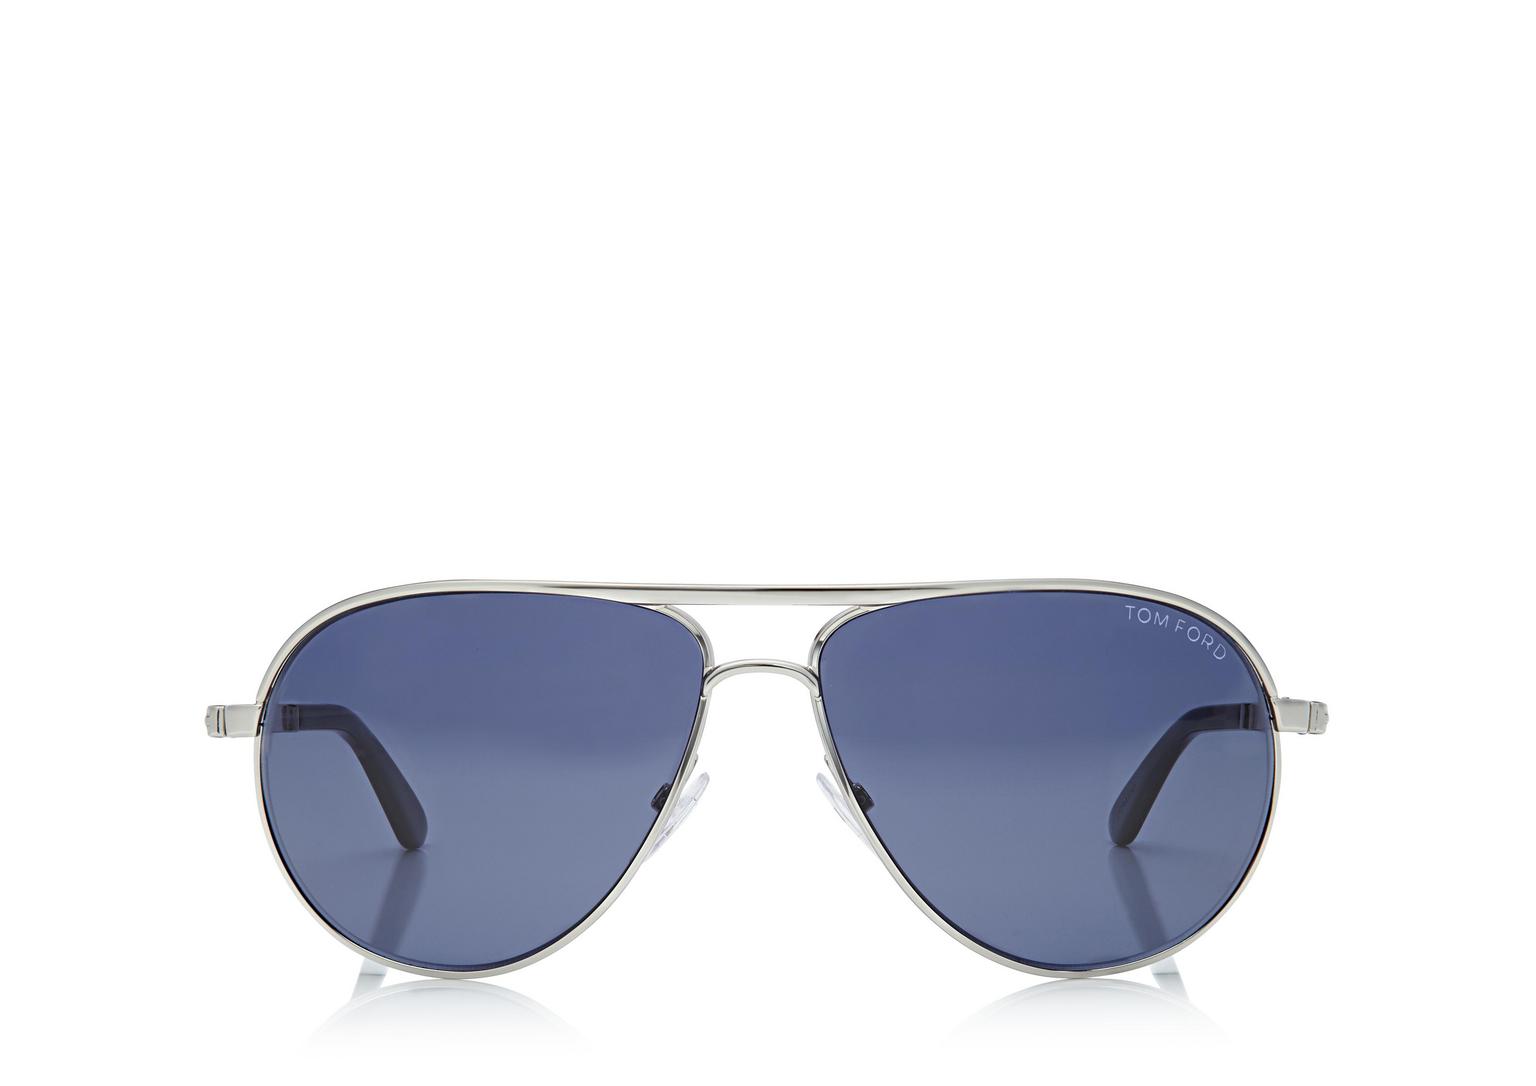 Tom Ford Marco Sunglasses as worn by Daniel Craig